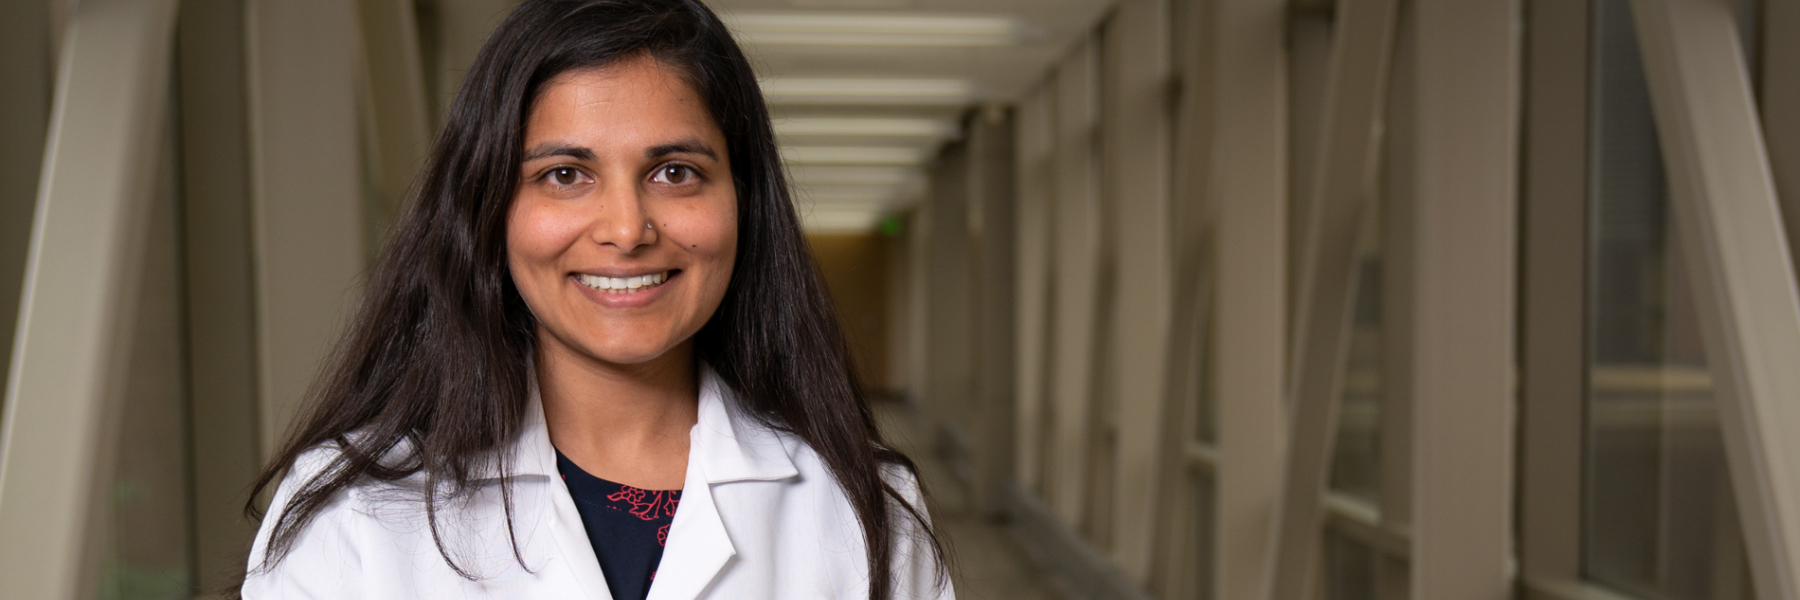 Dr. Shivani Garg in white coat